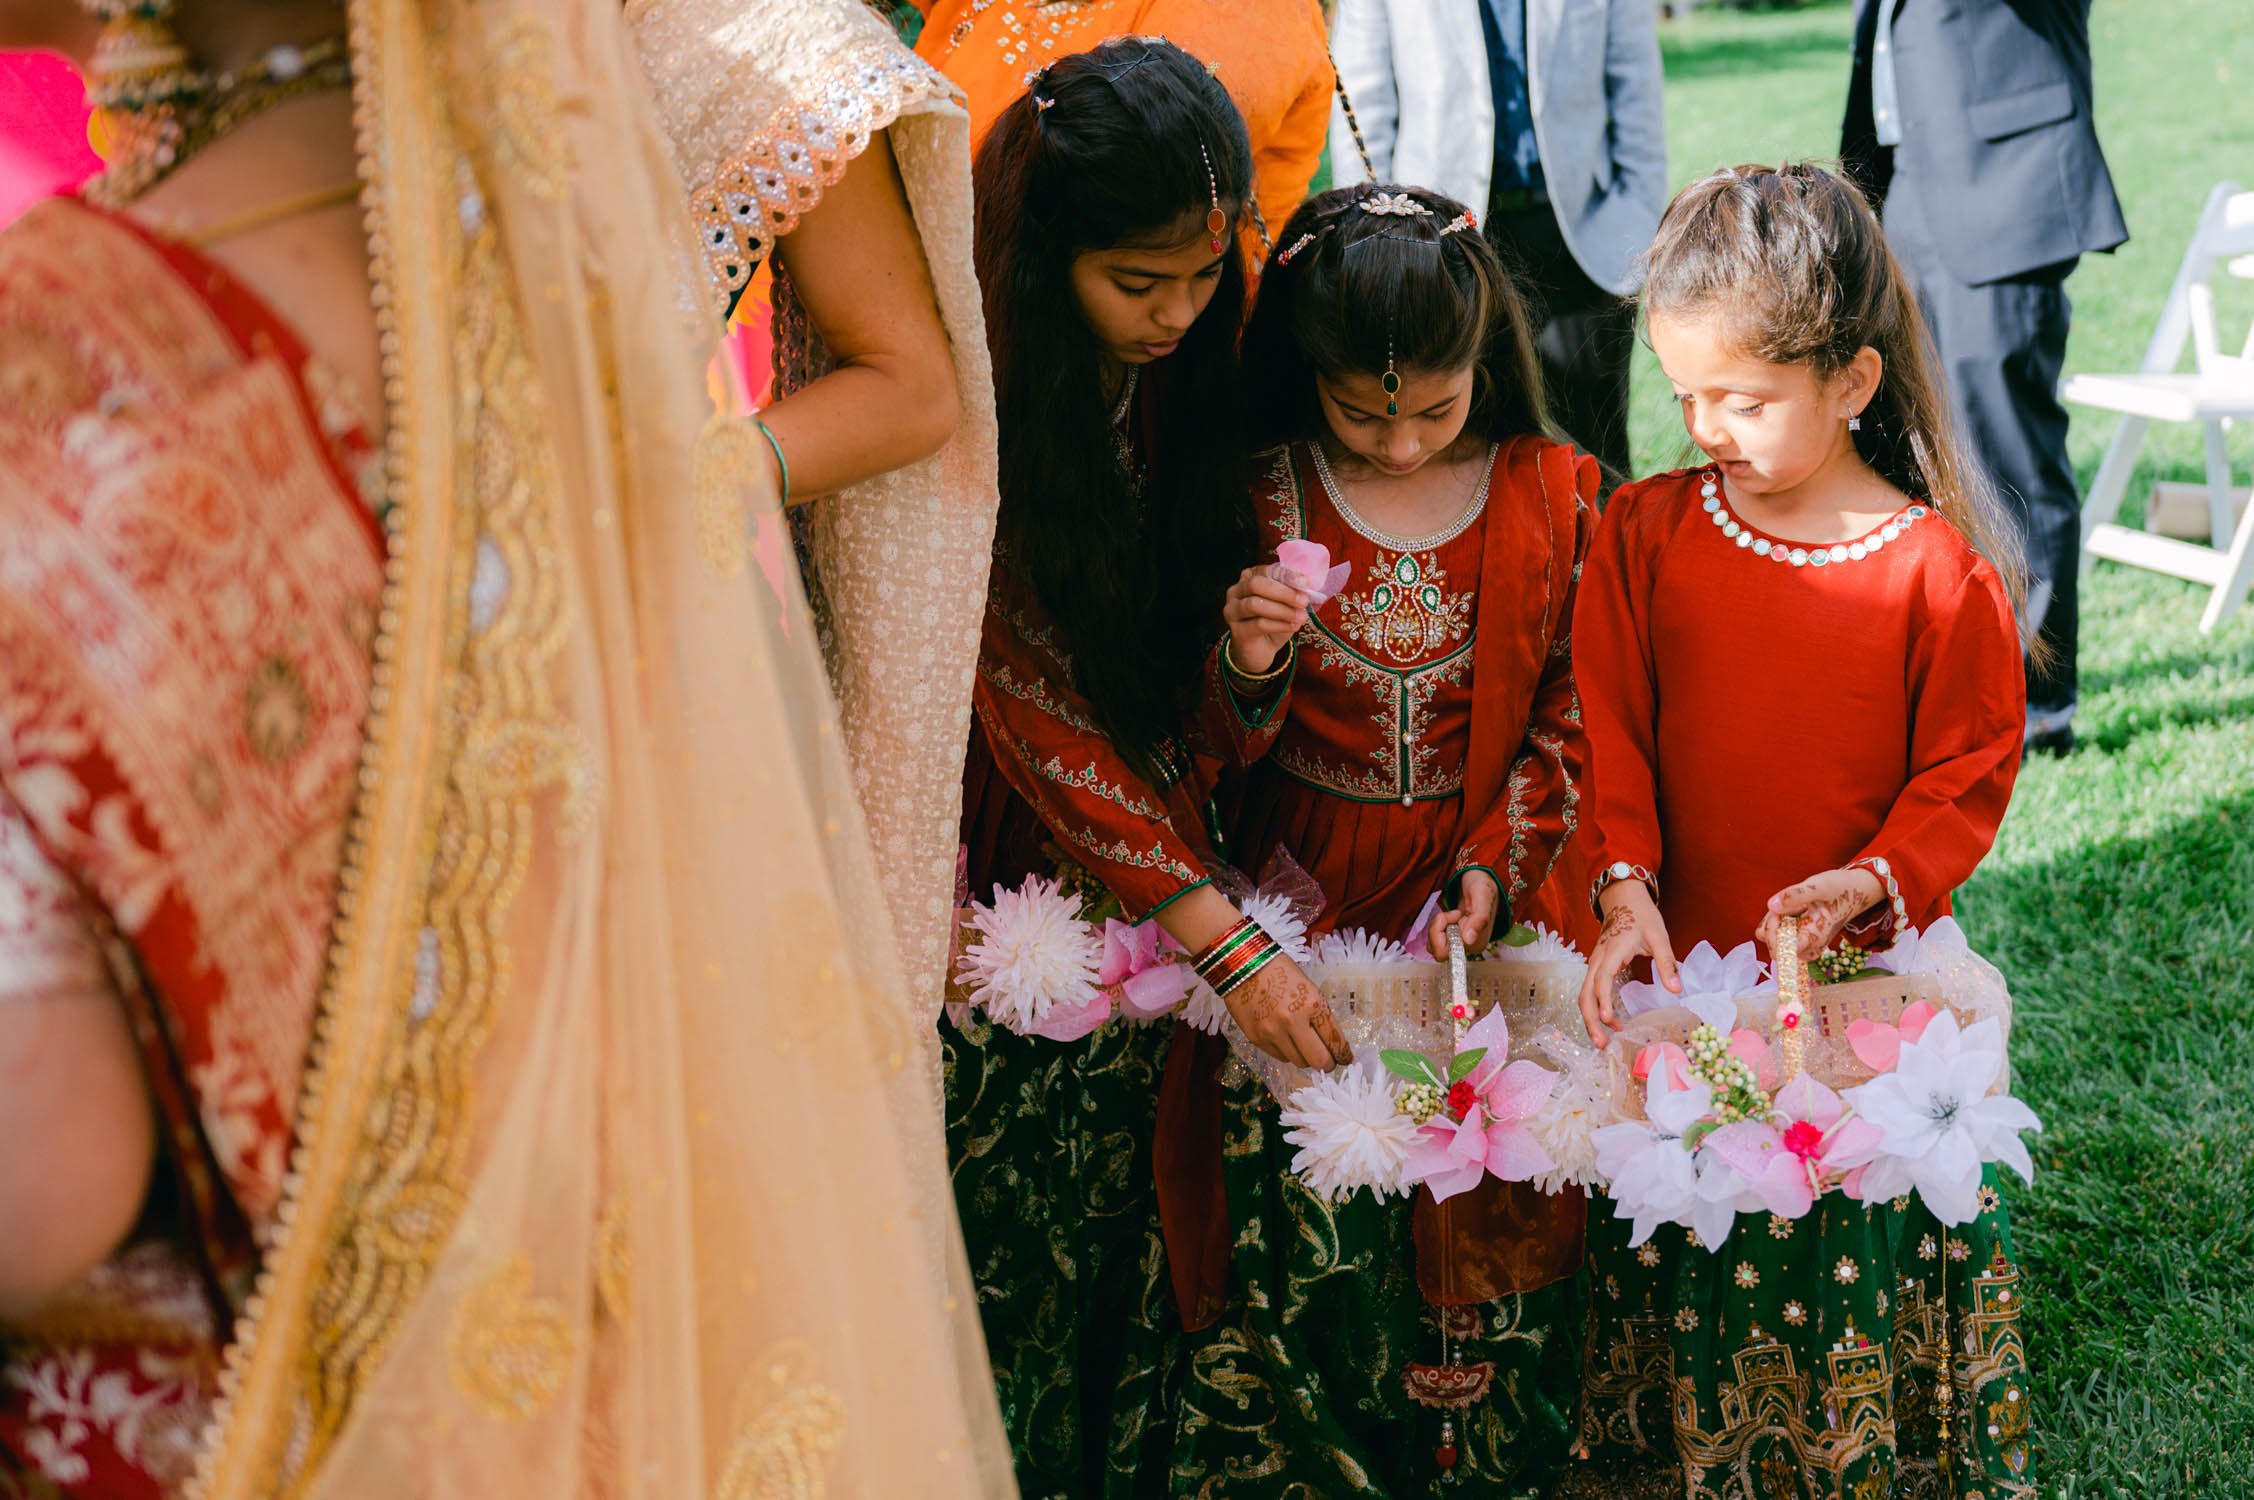 Hindu ceremony with flower girls